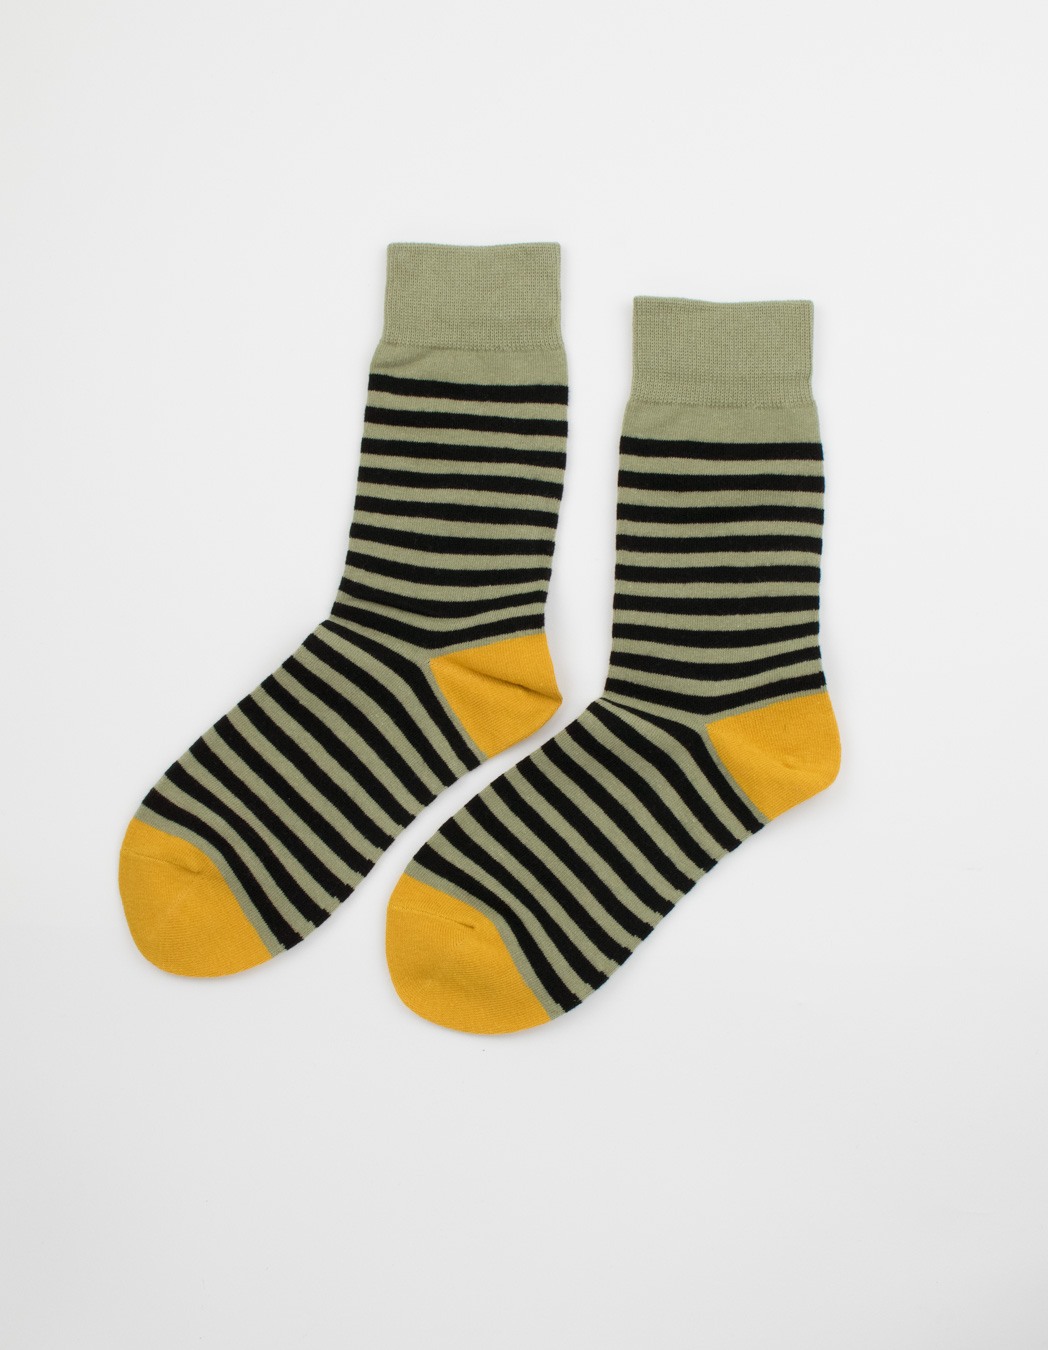 Men's Green Yellow Cotton Socks with Black Stripes - DESEQUEEN